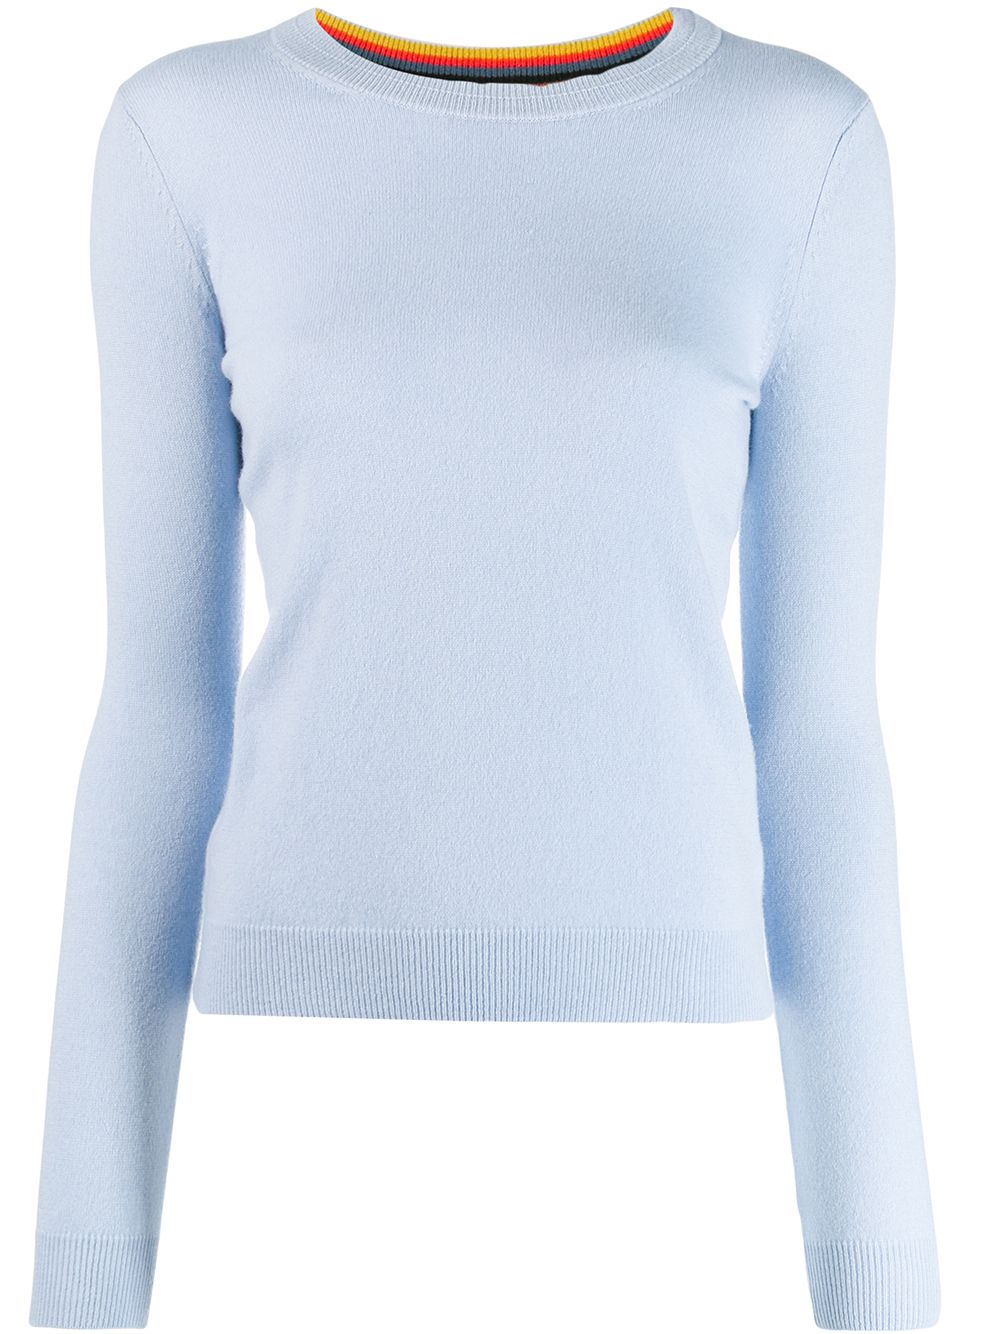 paul smith light blue sweatshirt